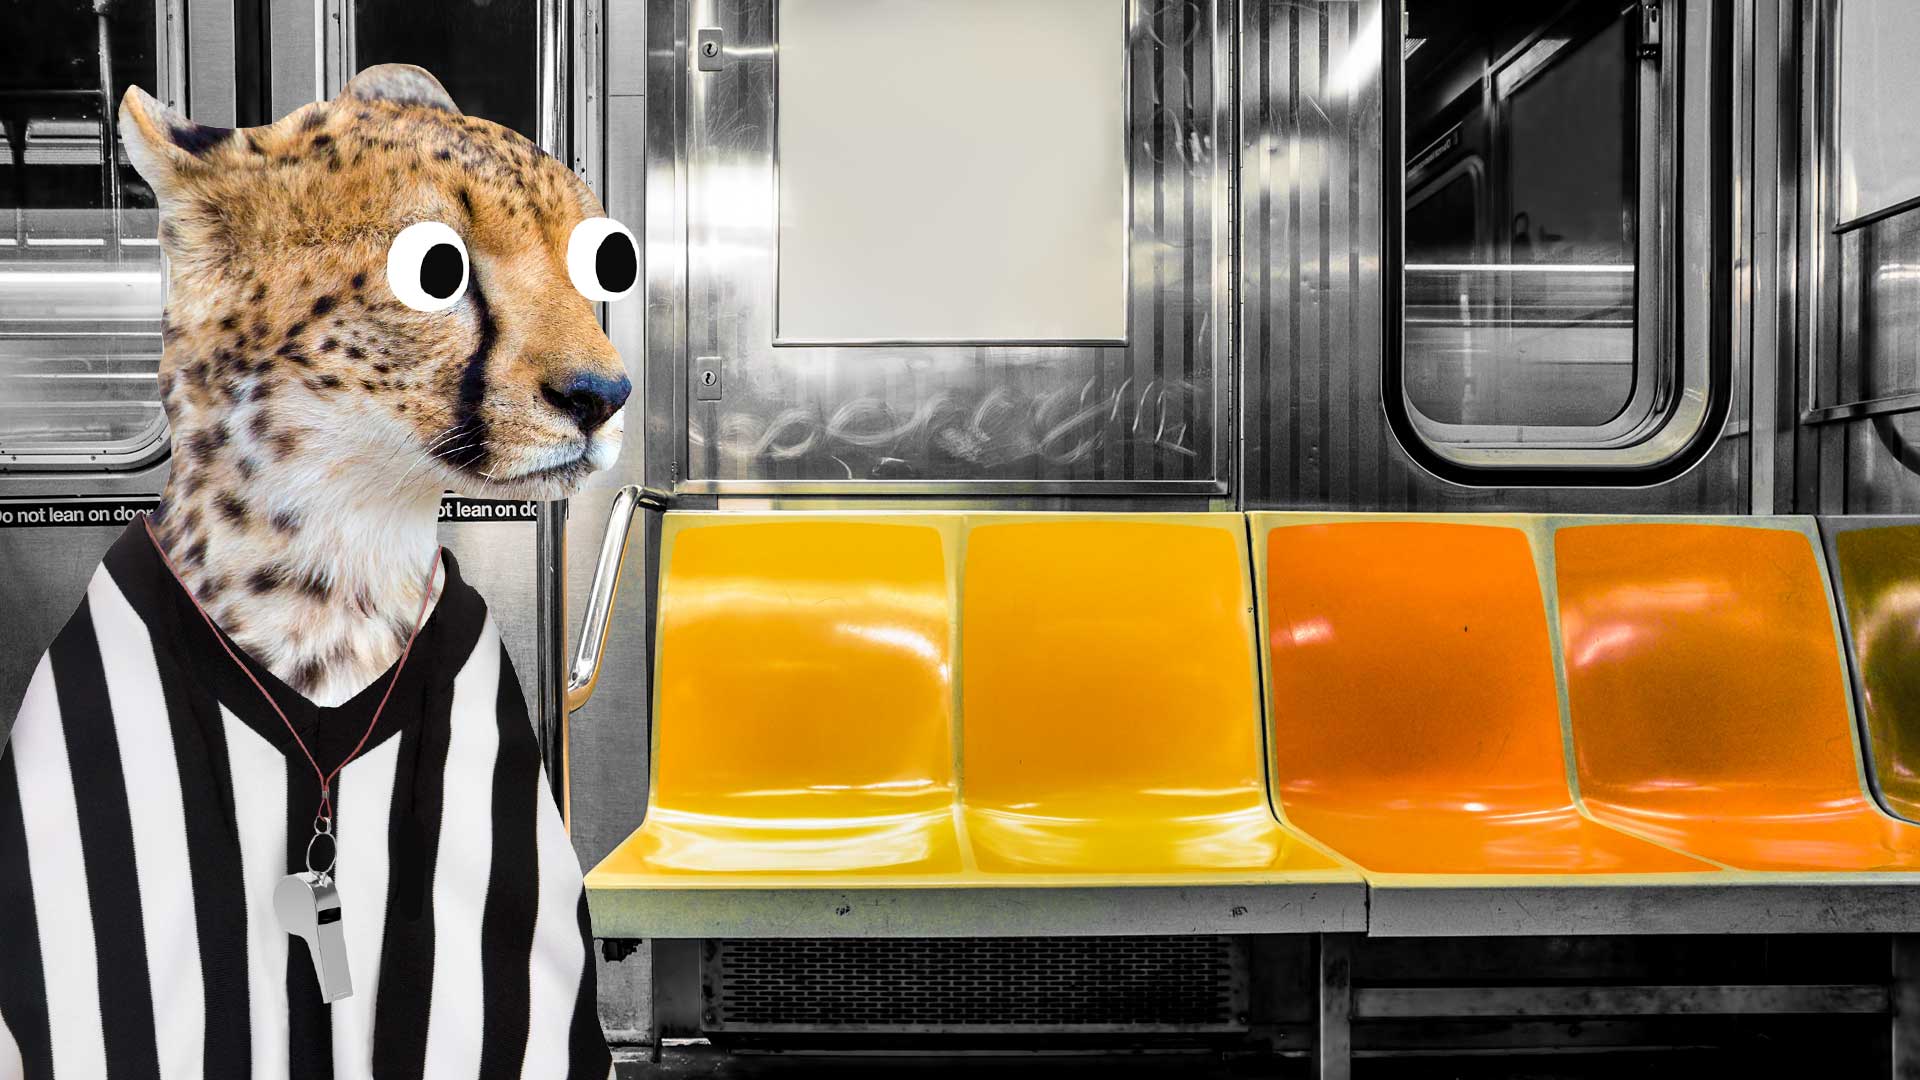 A cheetah on the New York City Subway